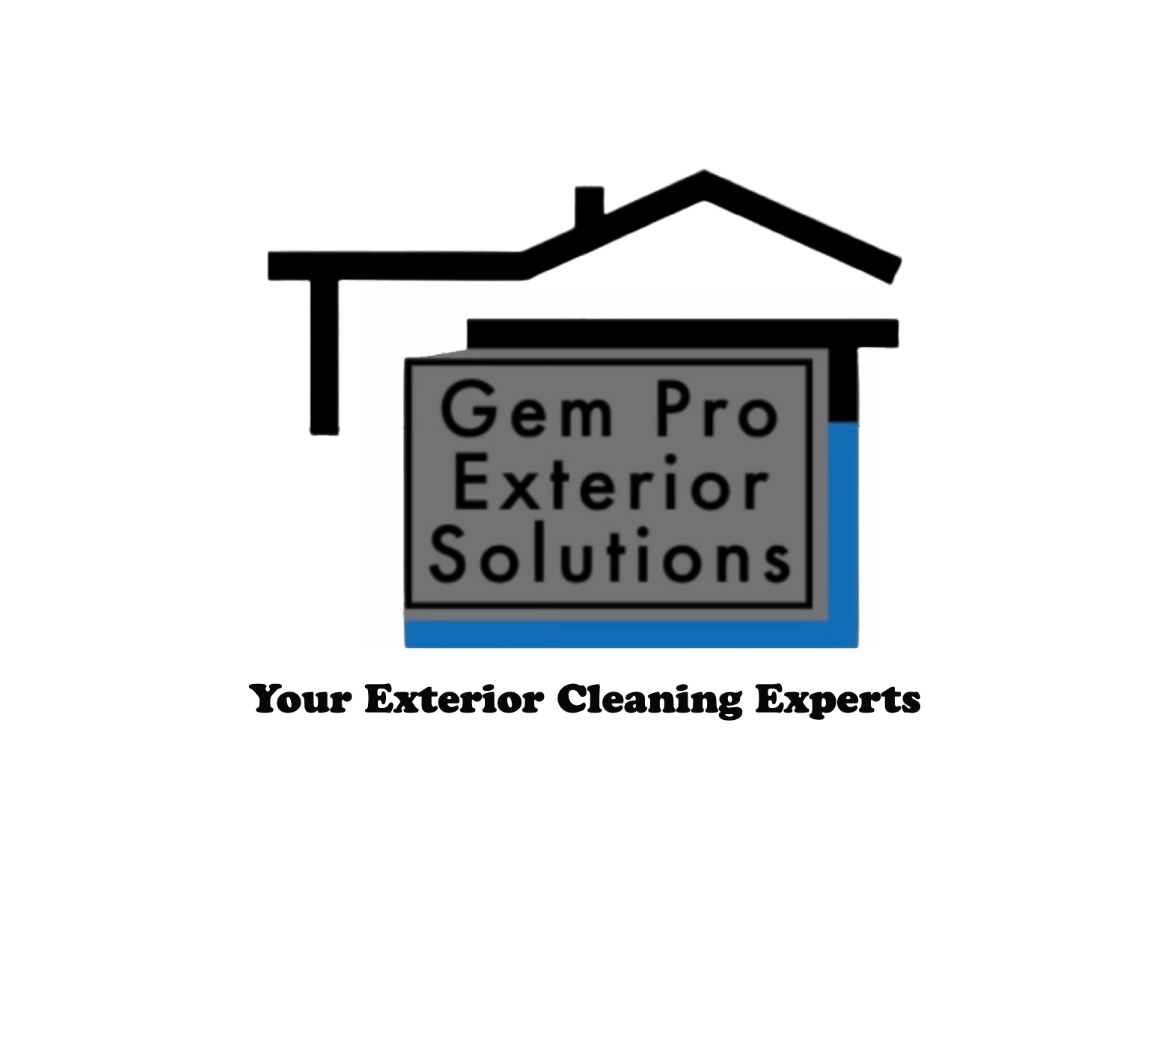               Gem Pro Exterior Solutions